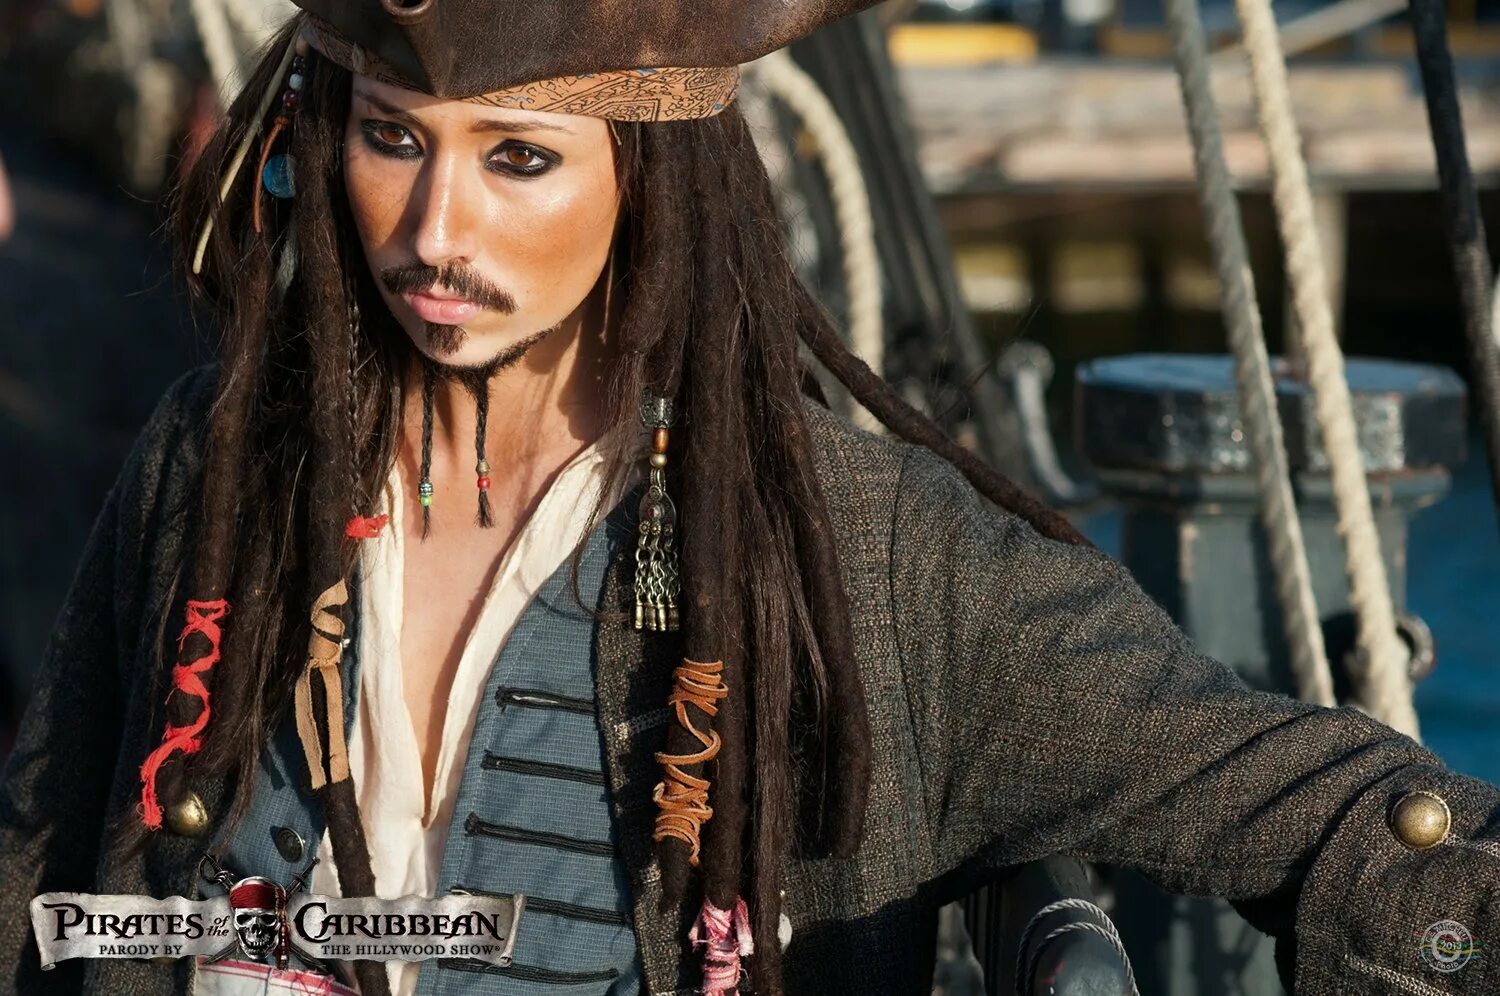 The Hillywood show Parody пираты Карибского моря. Костюм пирата Карибского моря. Ю Тенфьюрд Салли дочь пирата. Пираты Карибского моря пародия.